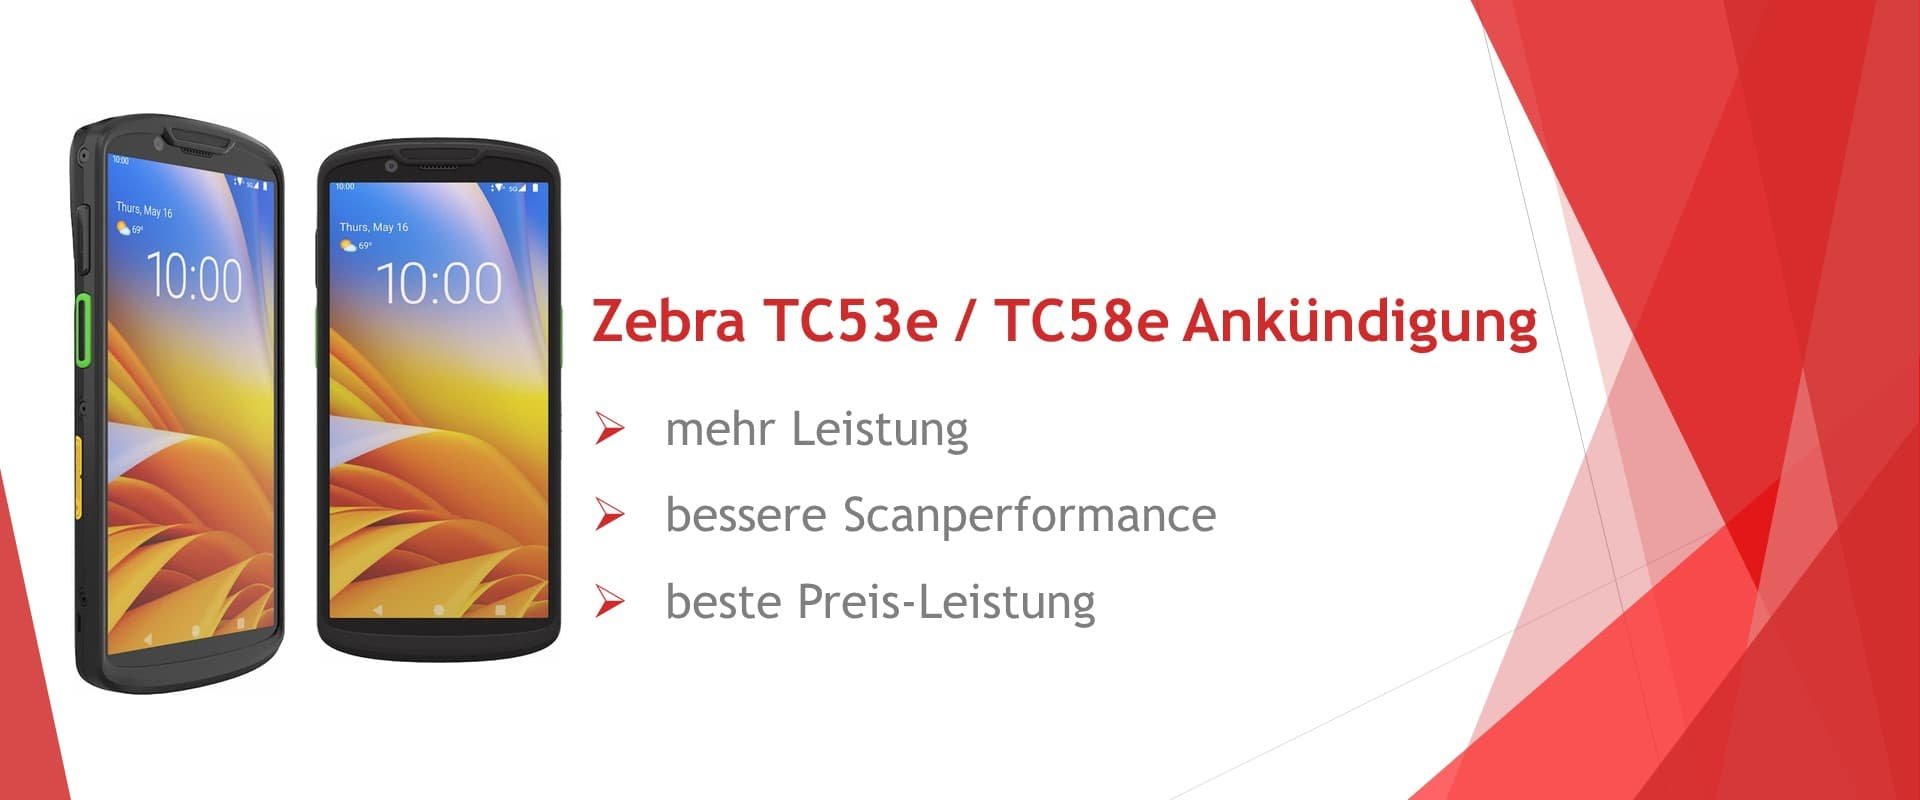 Der neue Zebra TC53e/TC58e - jetzt erhältlich